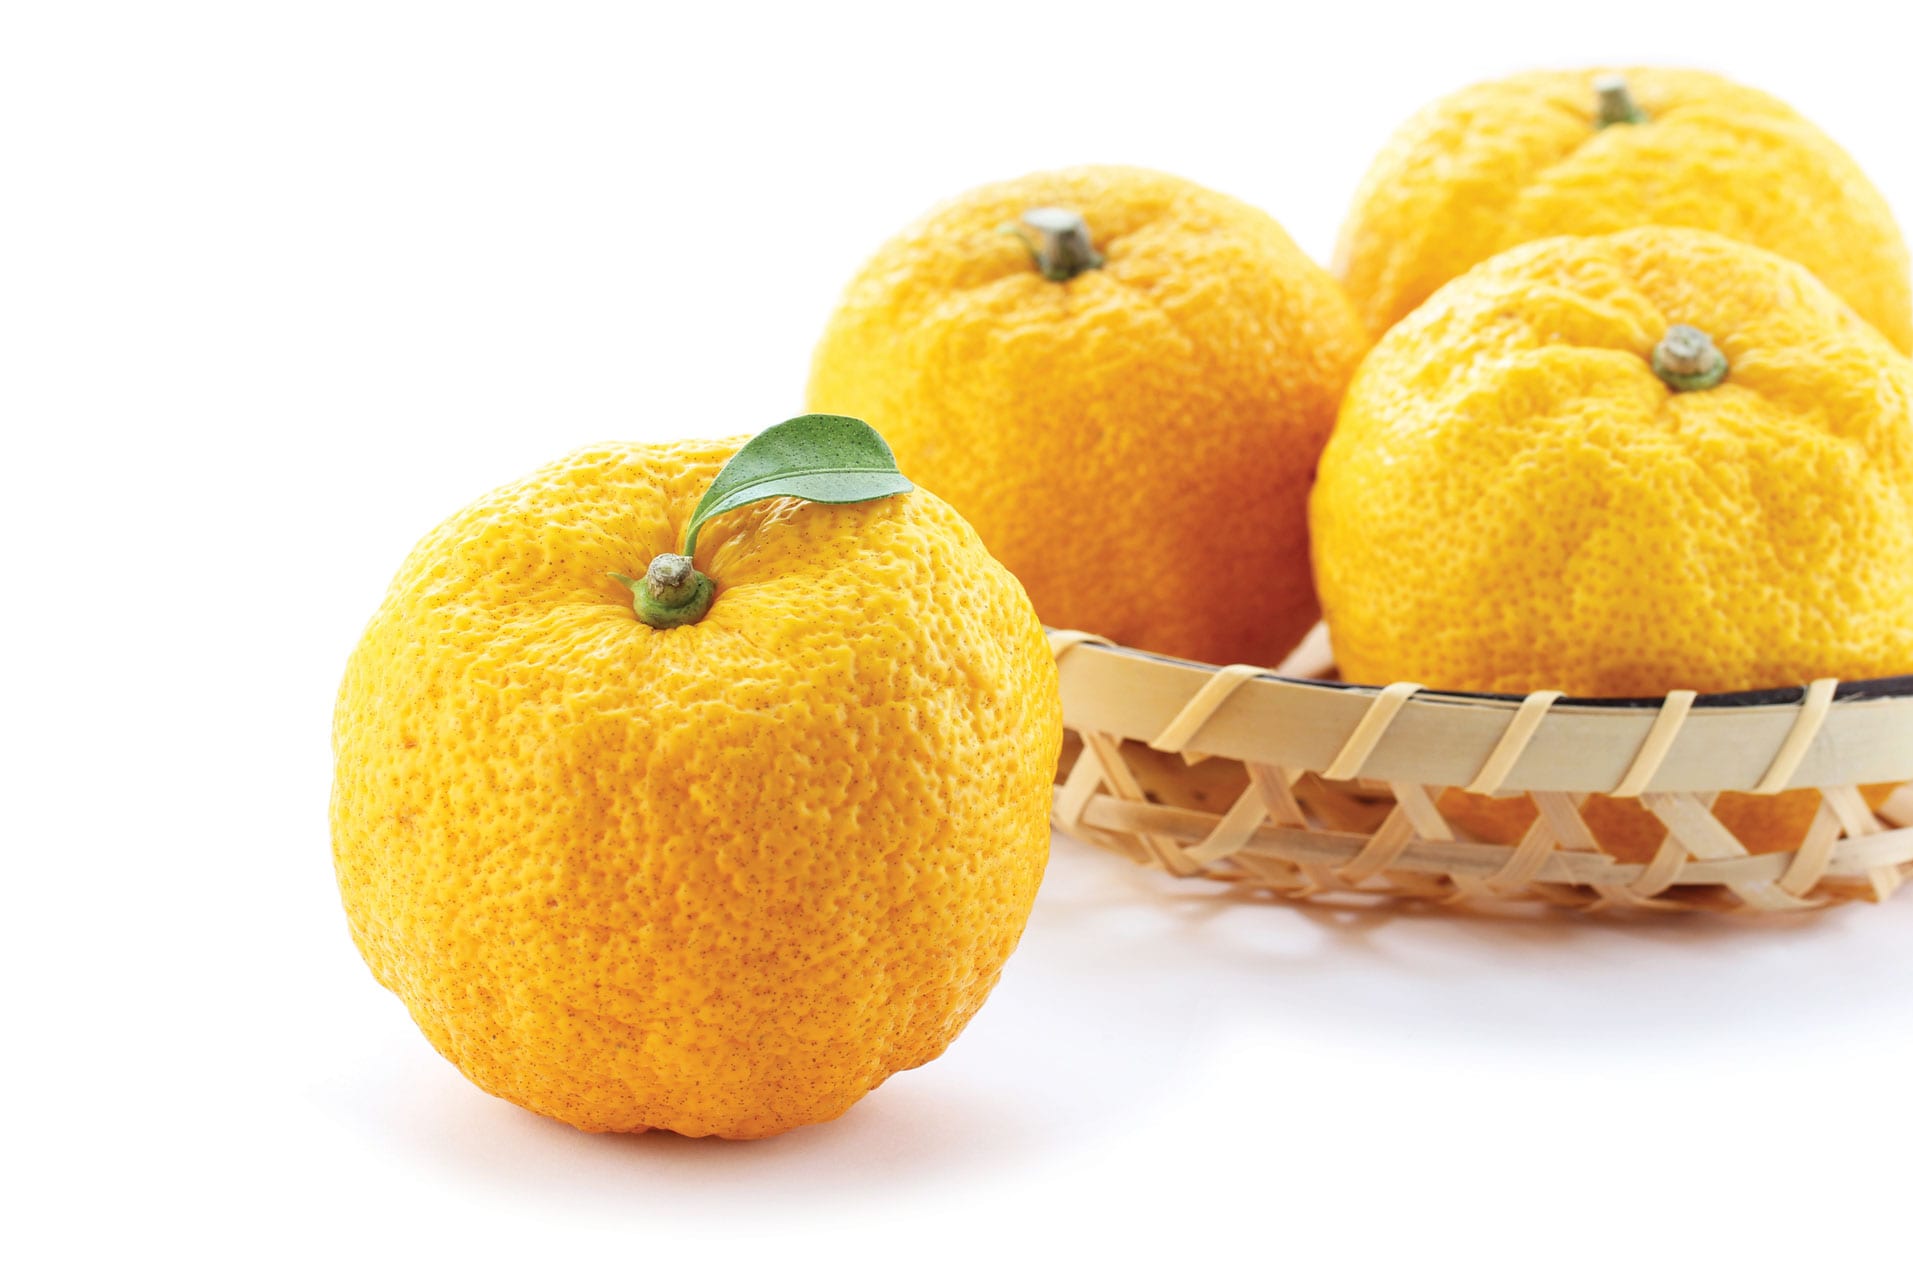 Yuzu - the aromatic Japanese citrus fruit